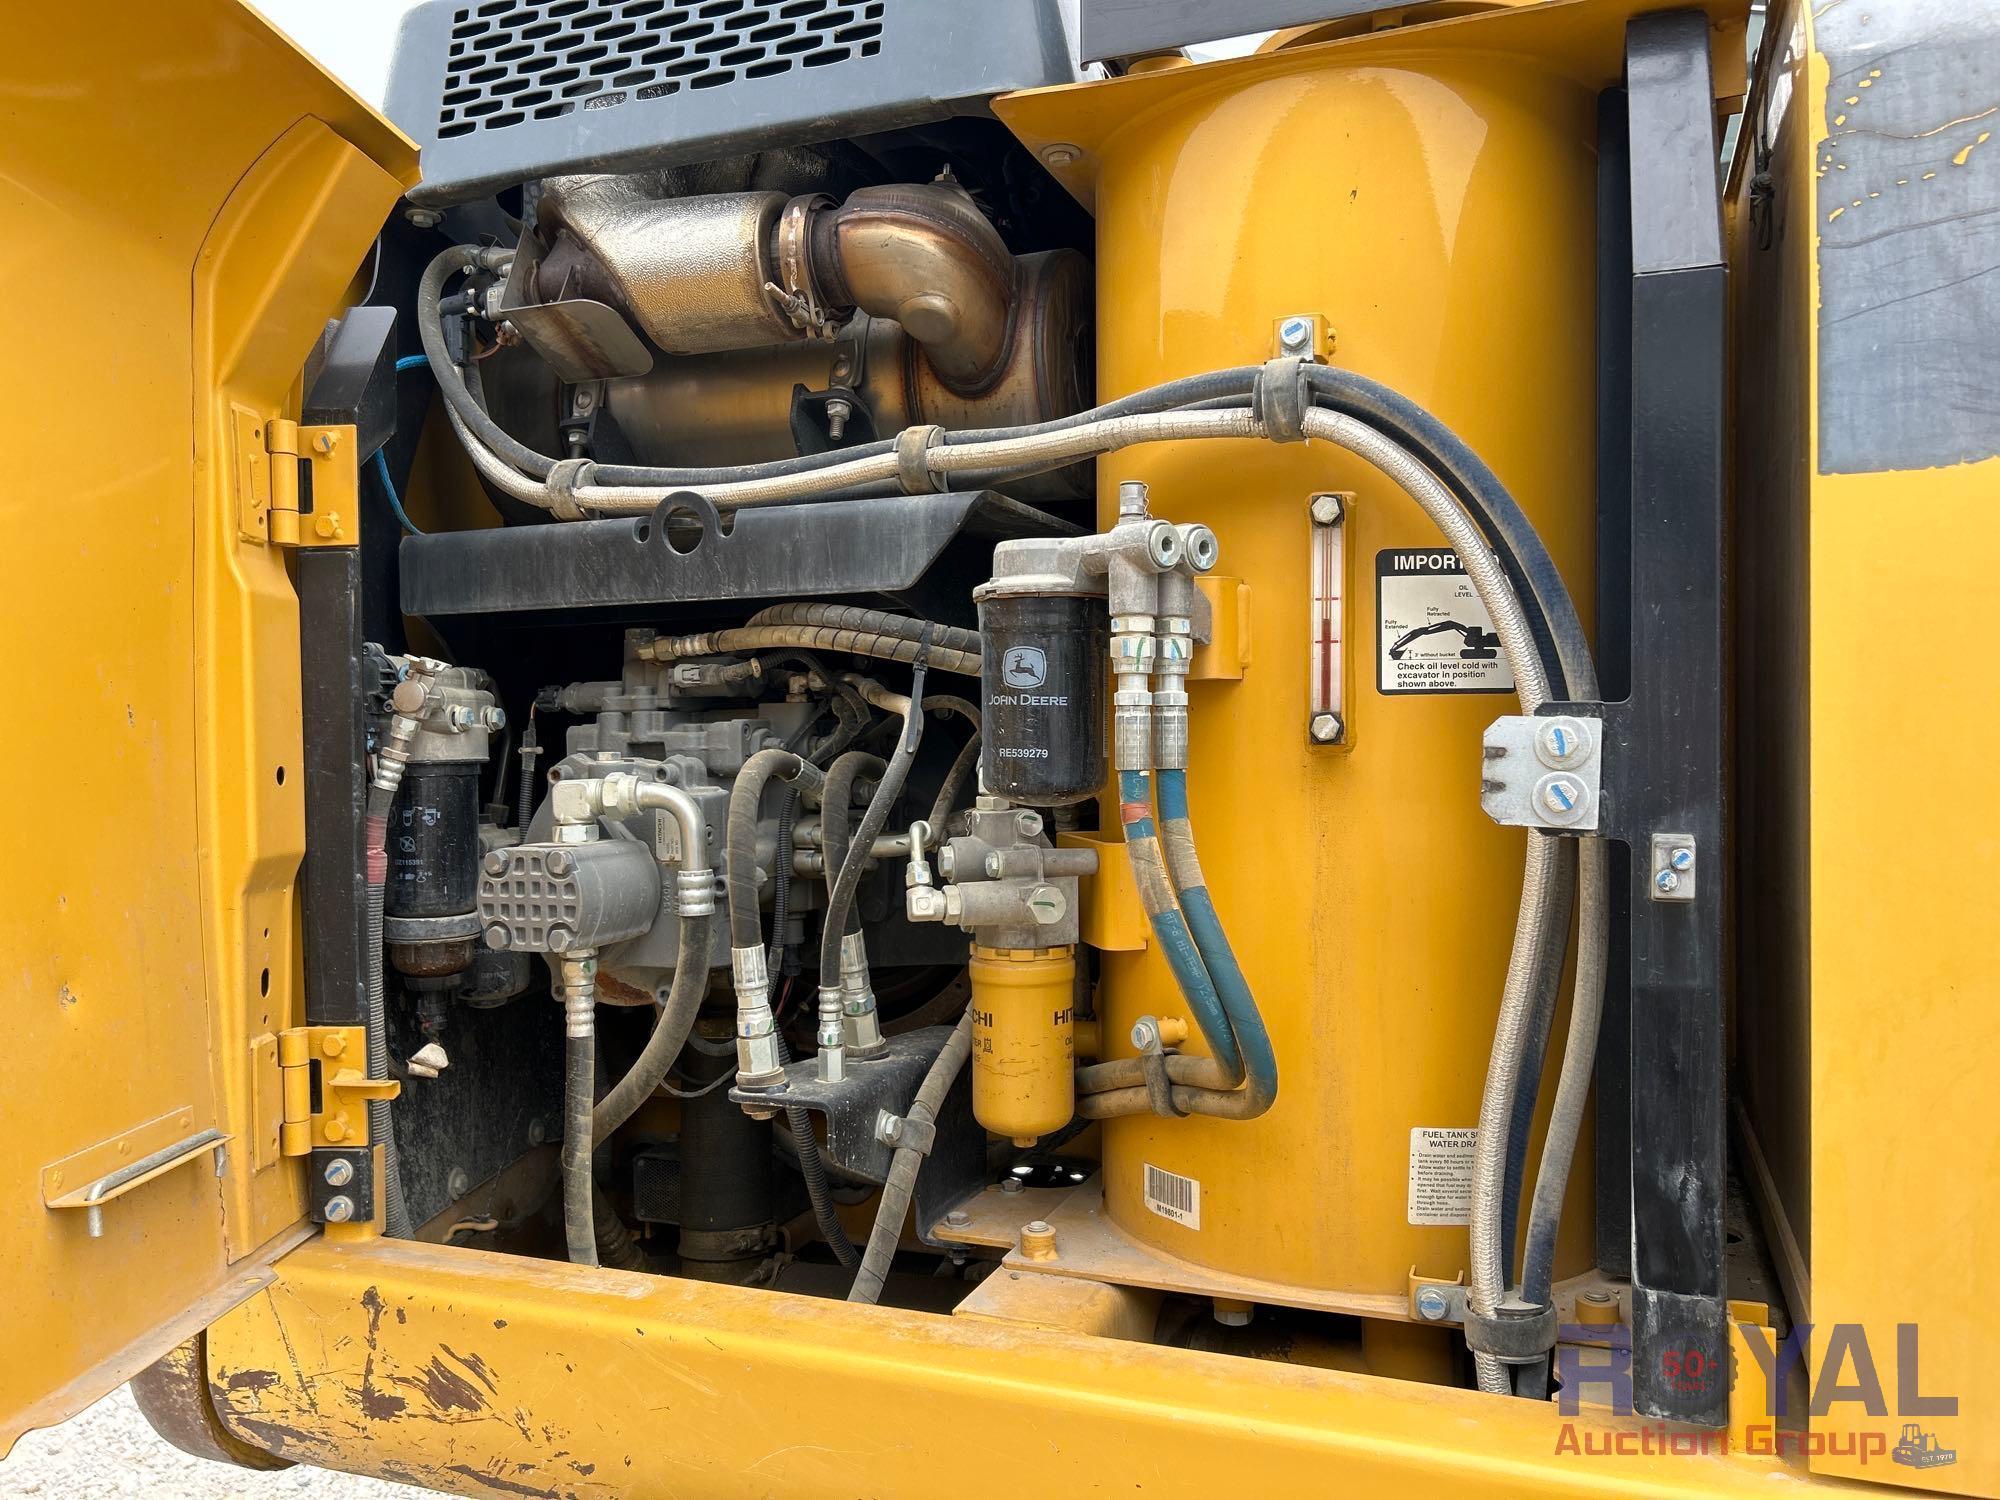 2019 John Deer 130G Hydraulic Excavator